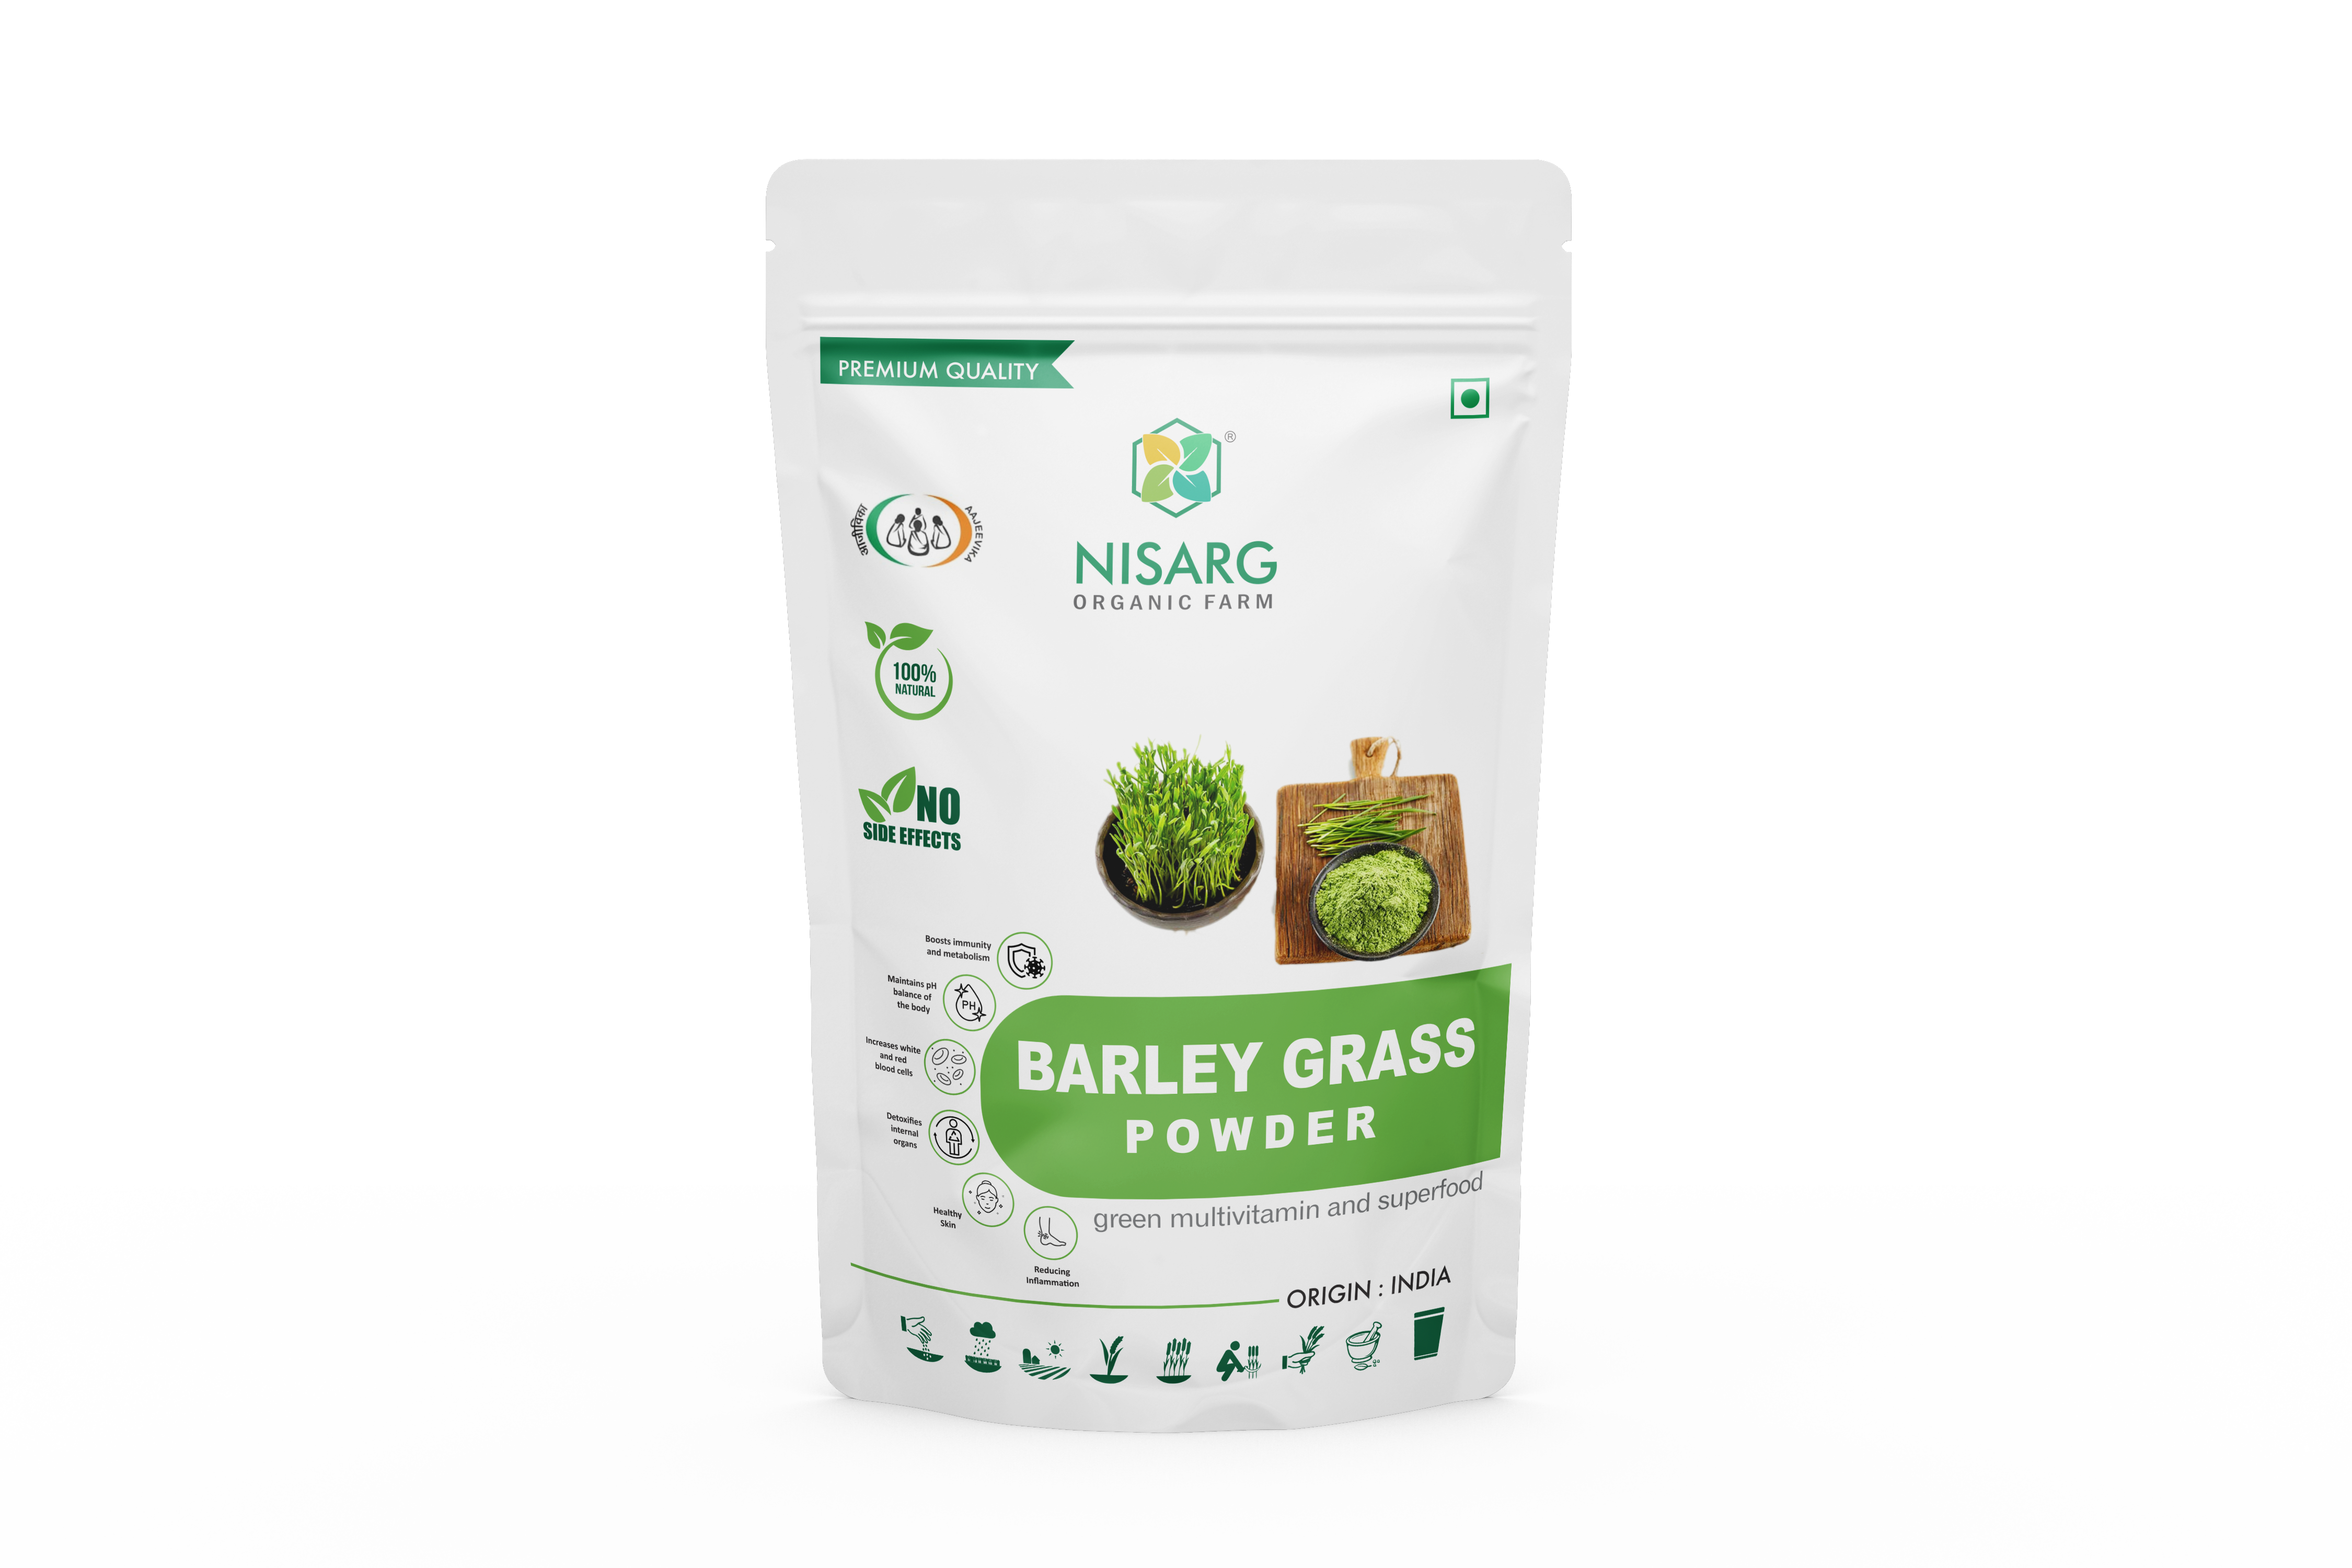 Product: Nisarg Barley Grass Powder